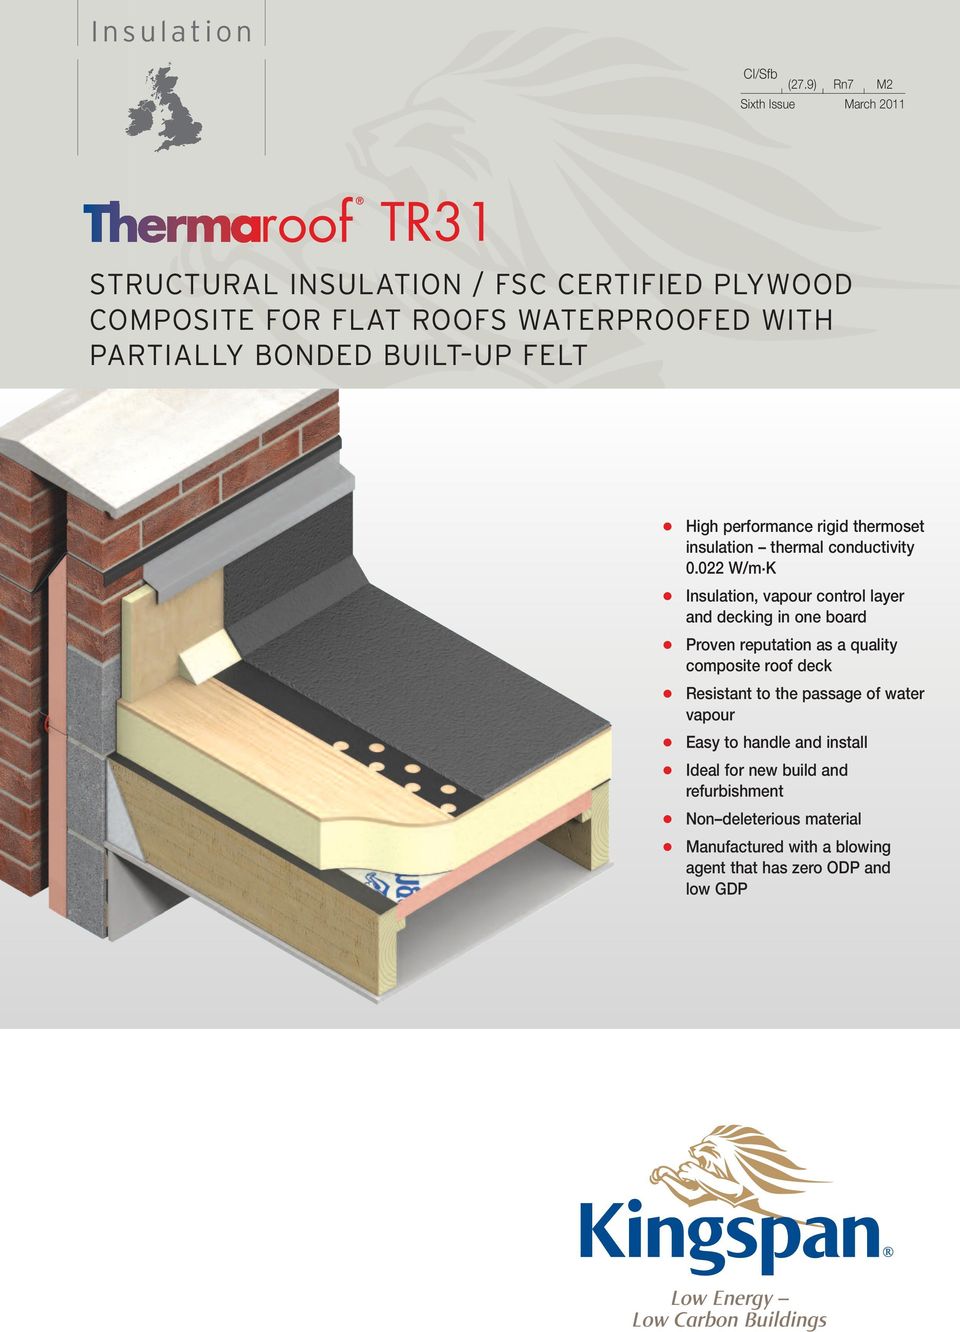 UP FELT High performance rigid thermoset insulation thermal conductivity 0.022 W/m.